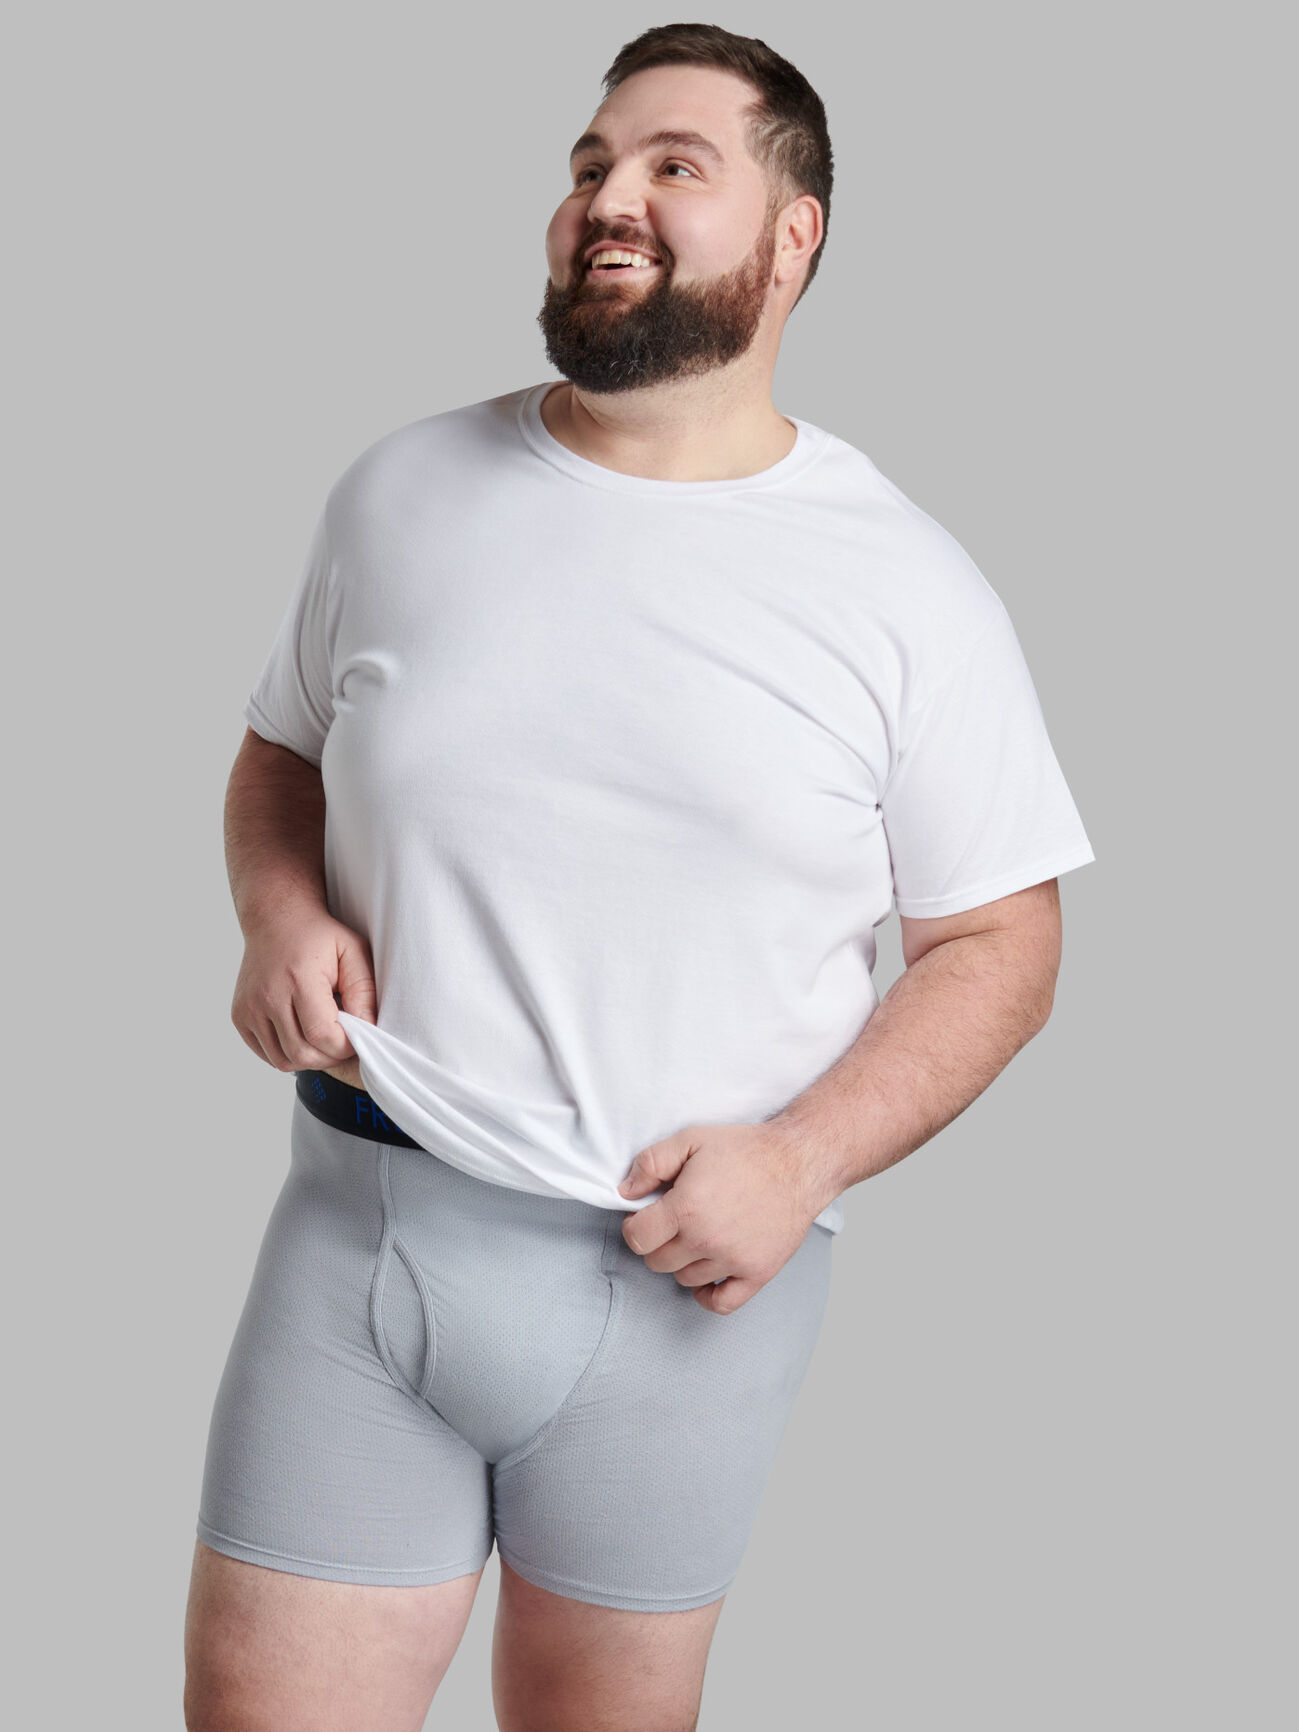 Cheap & Best JOCKEY Premium Underwear For Men - HERO 